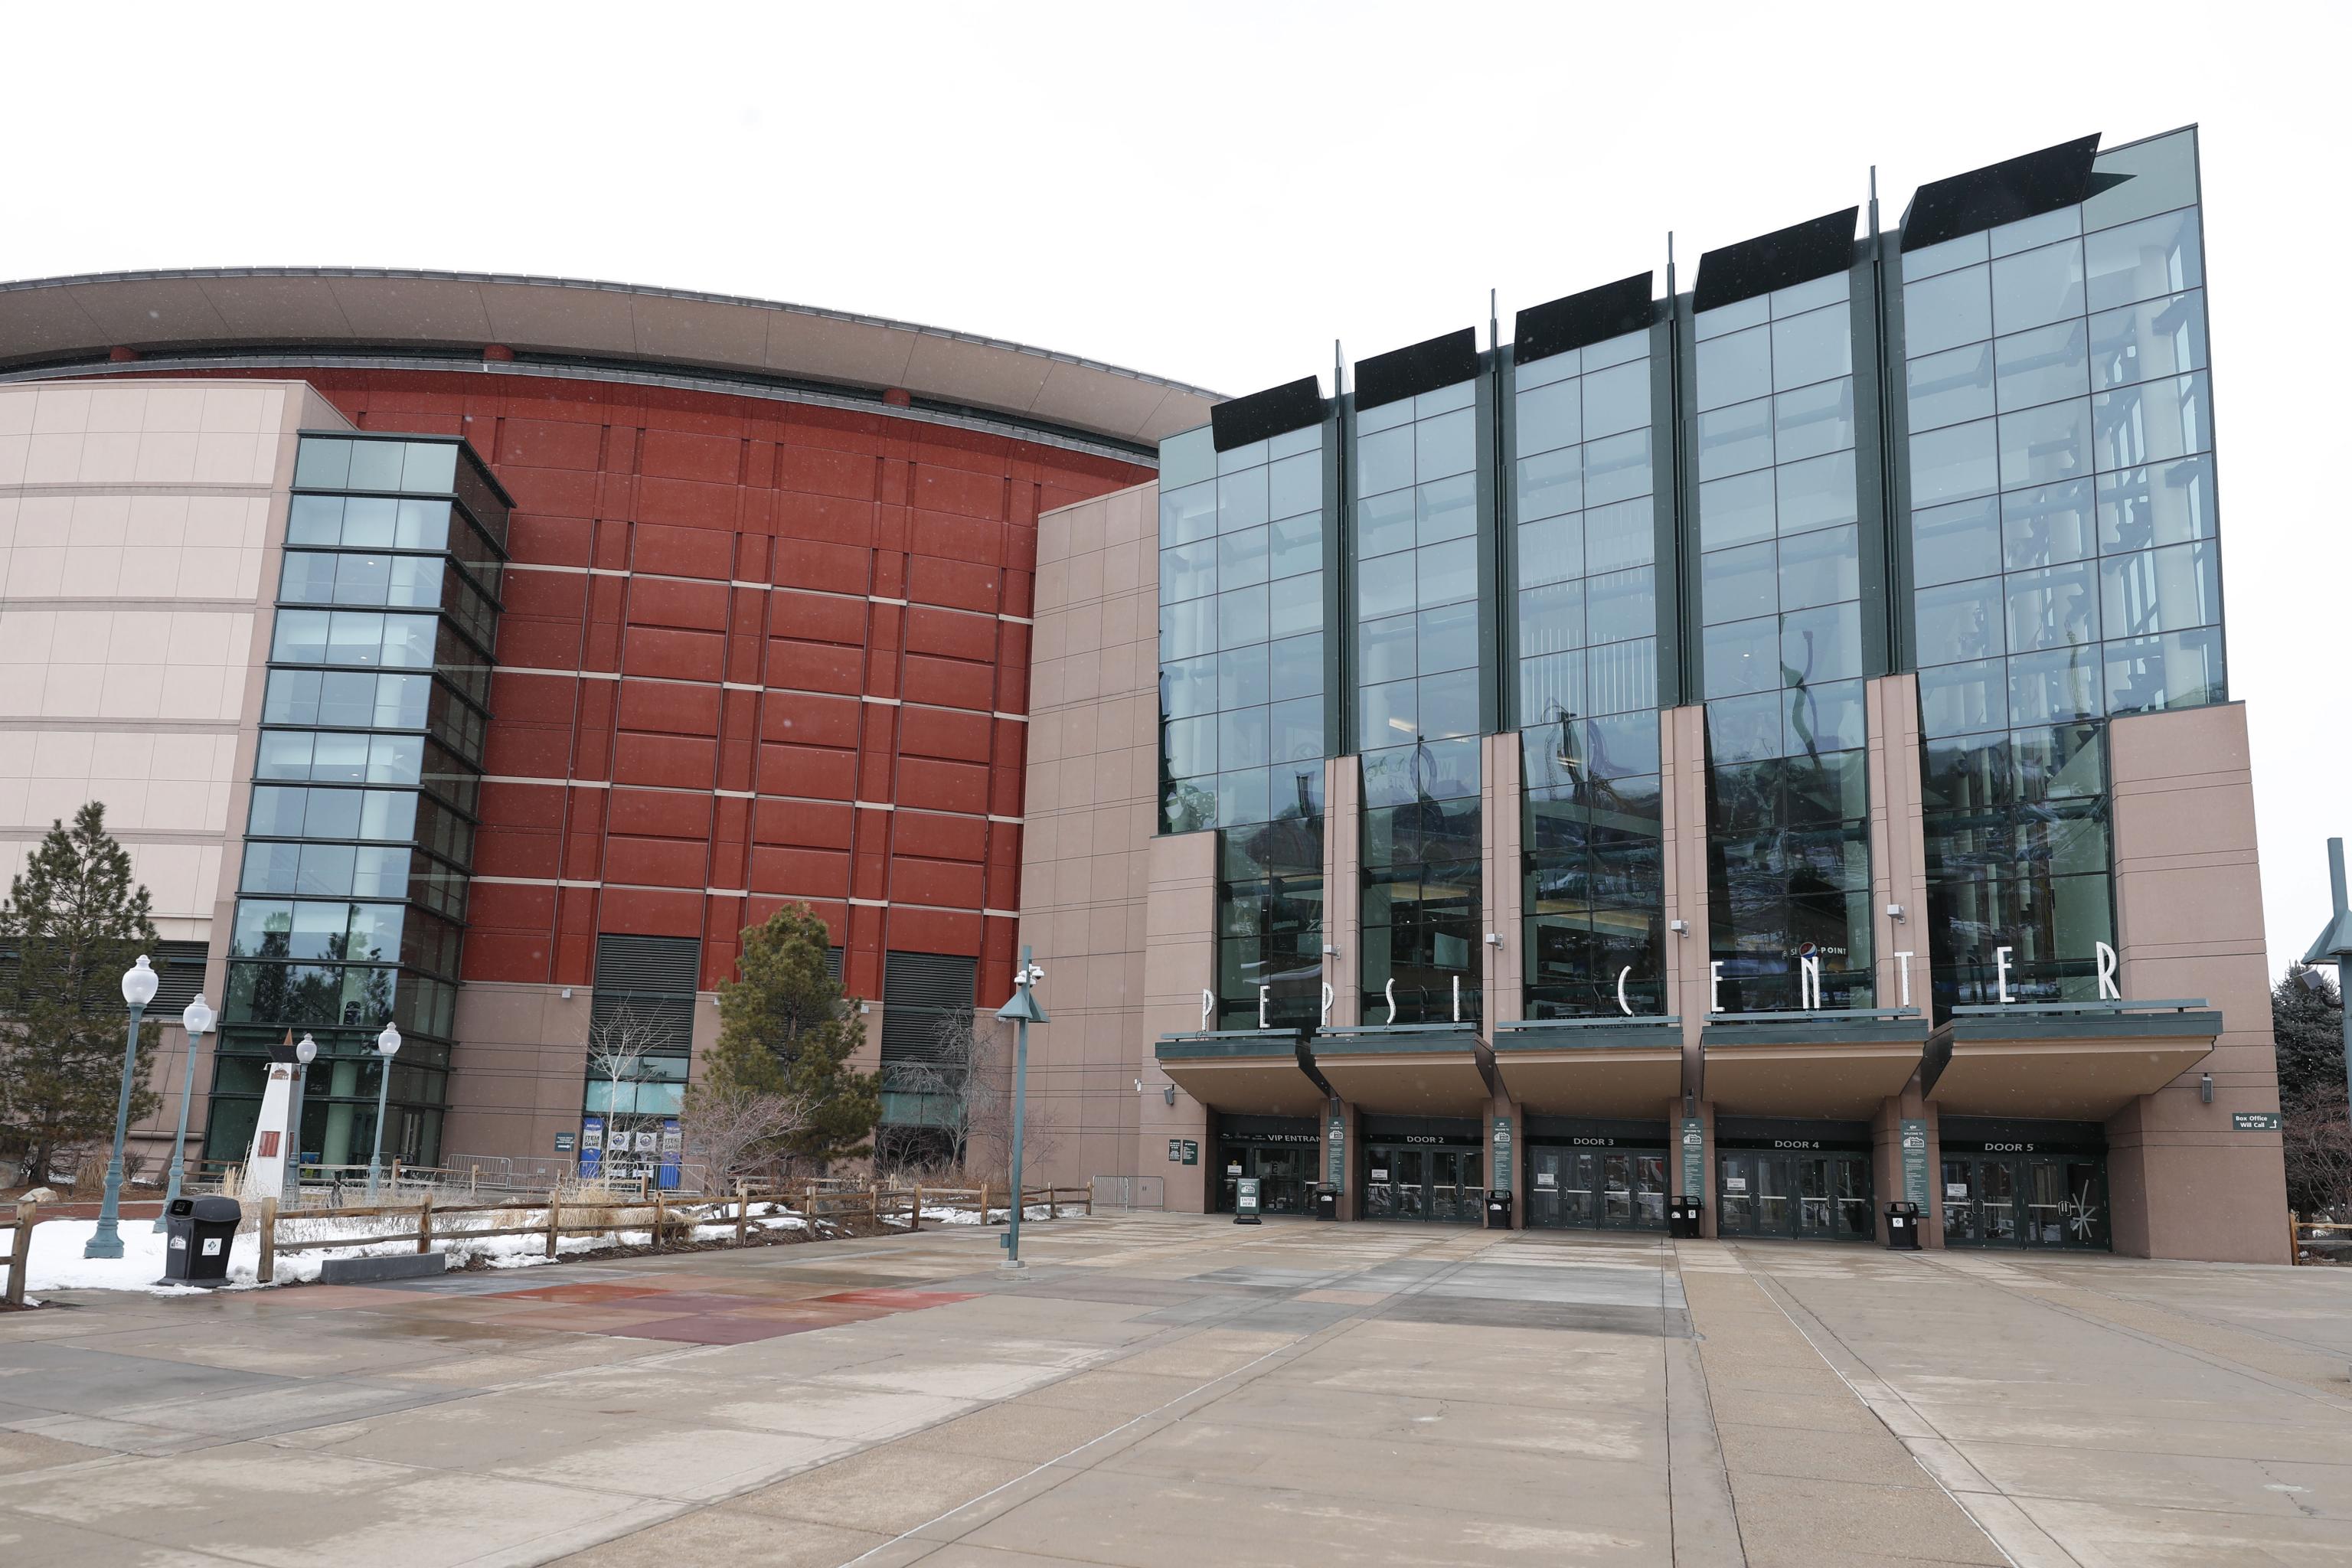 Home of Denver Nuggets renamed Ball Arena